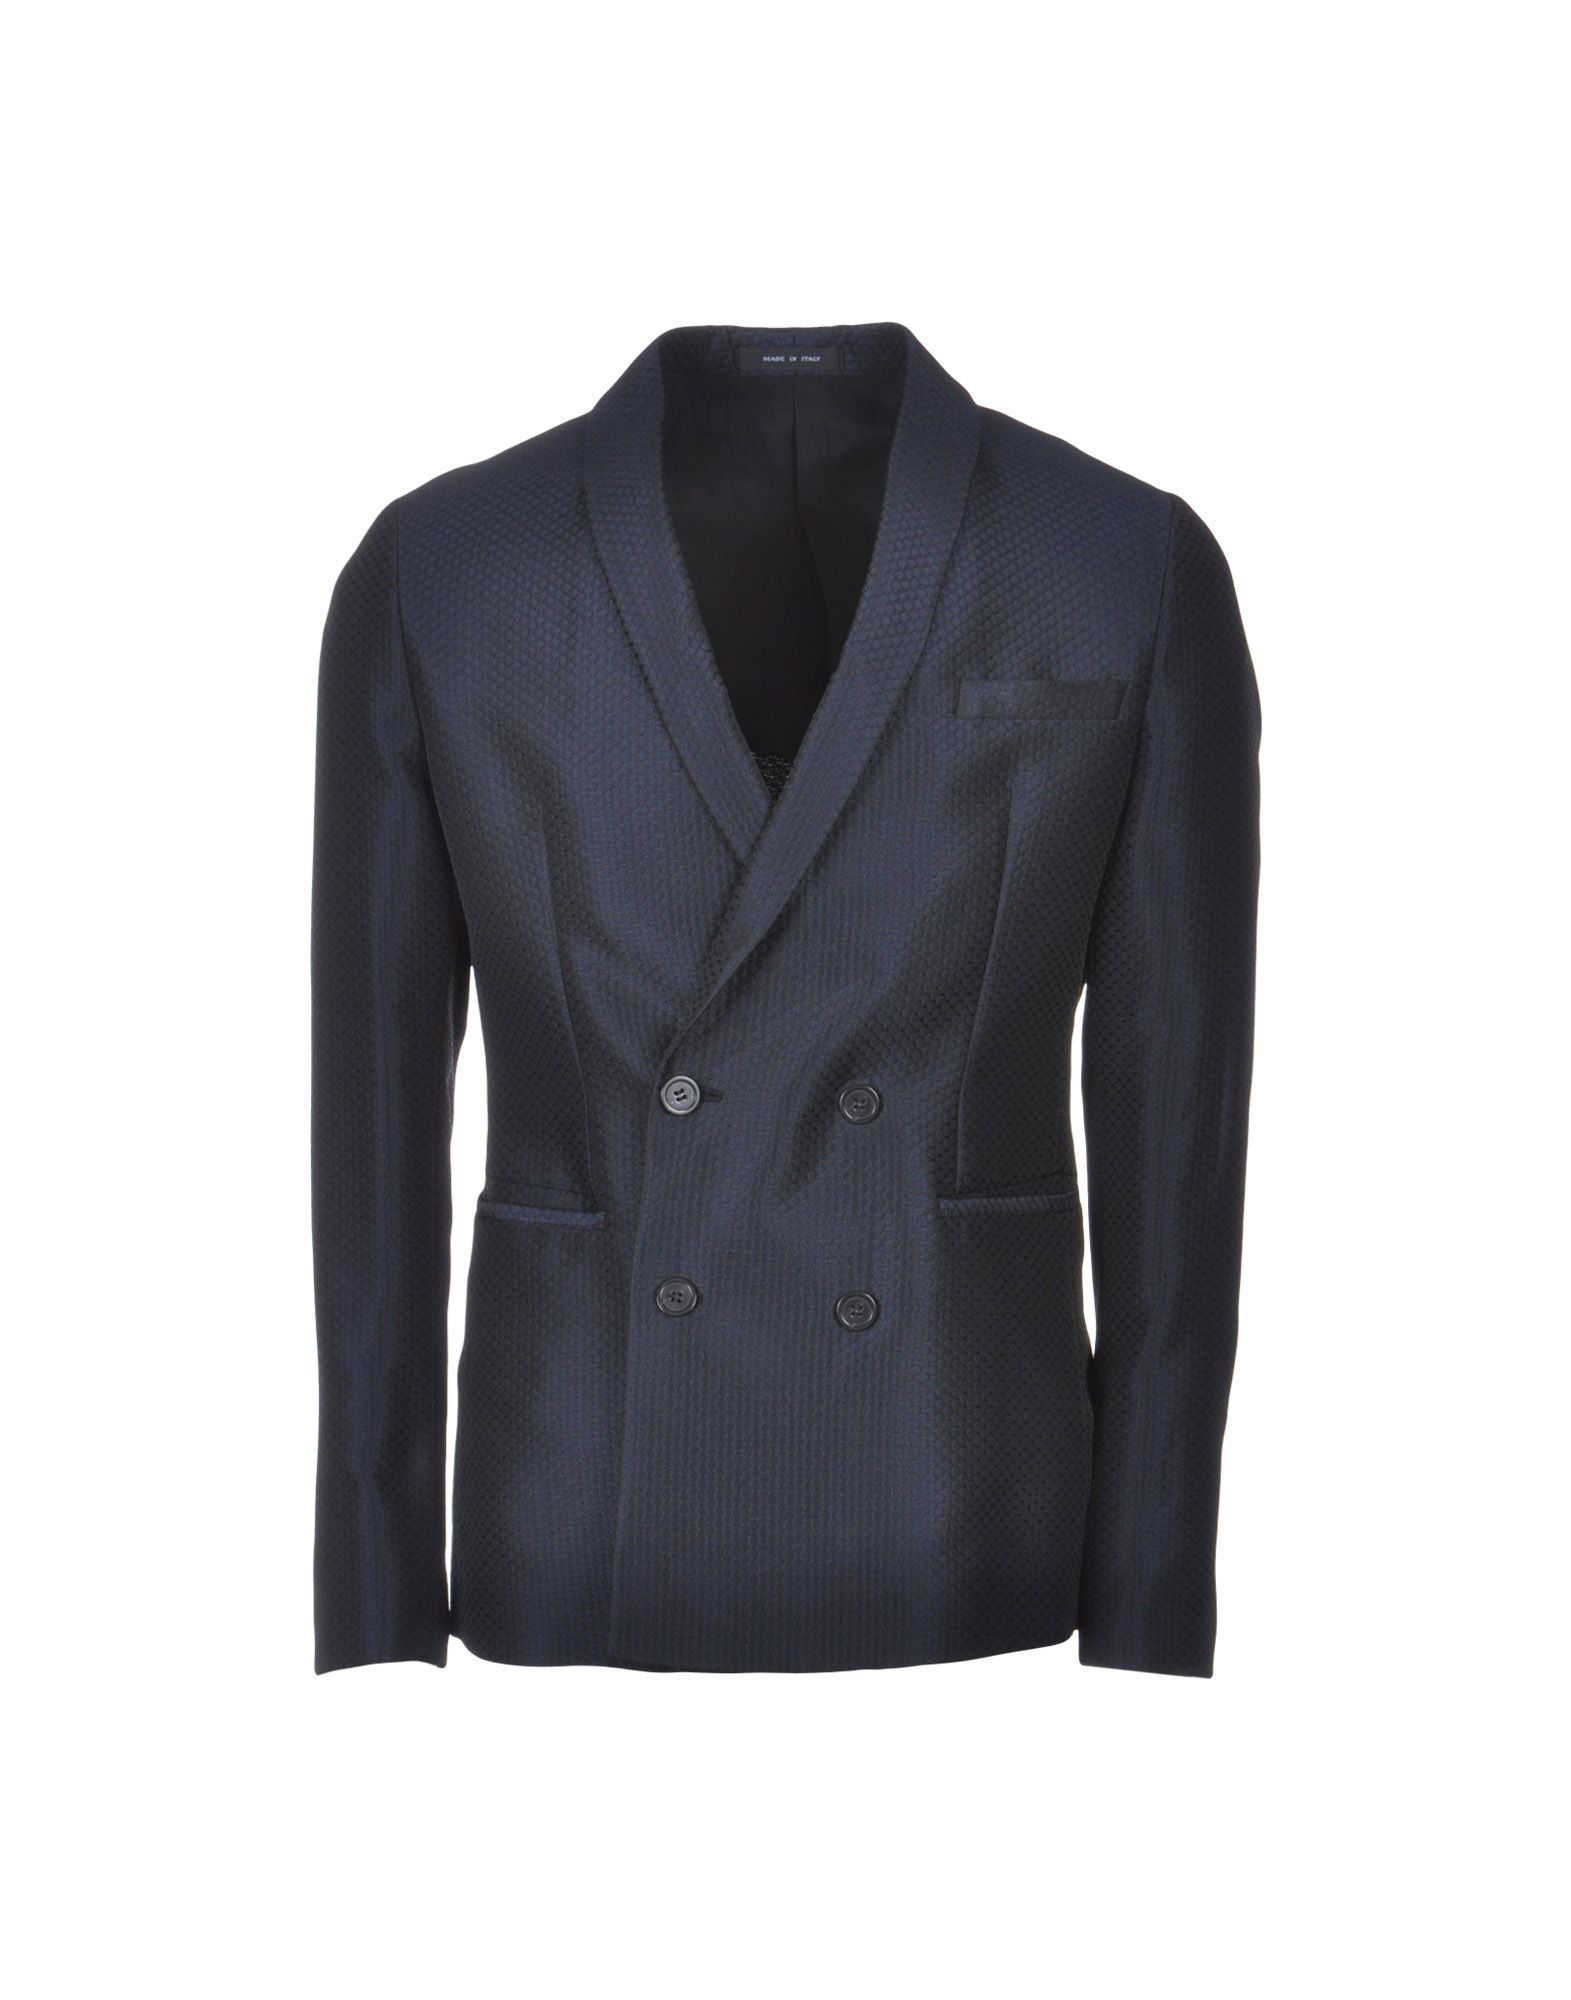 EMPORIO ARMANI Suit jackets - Item 49363443